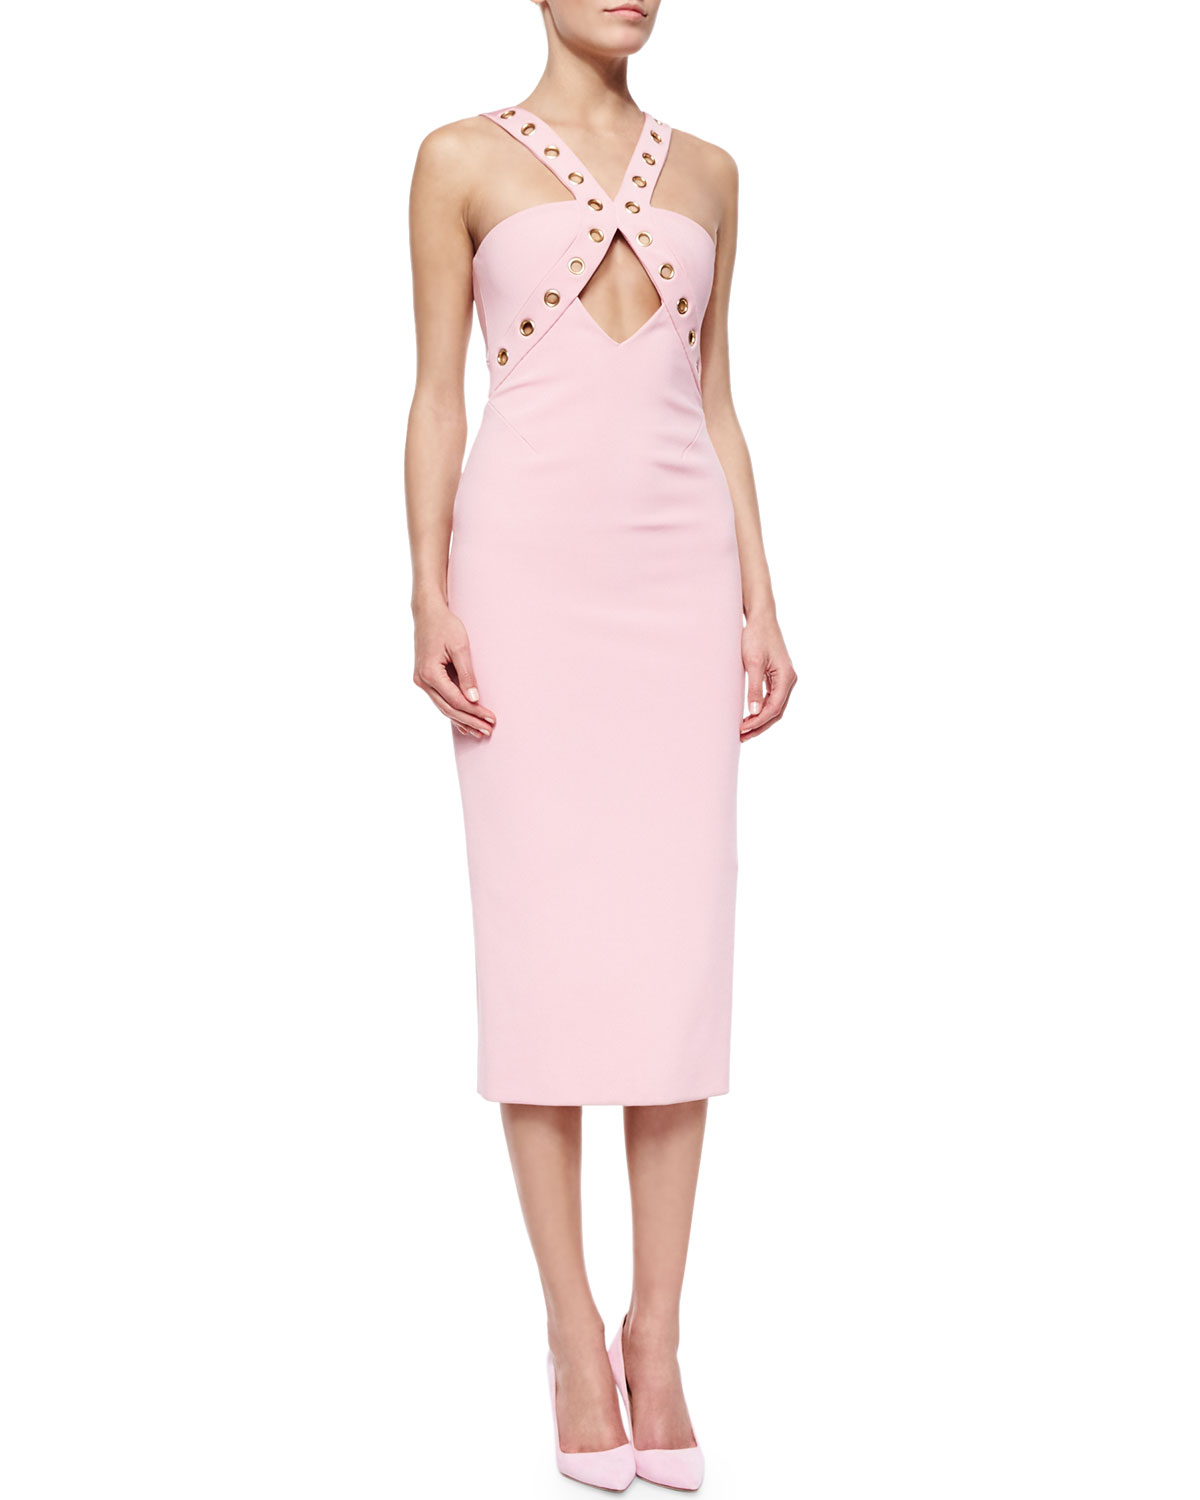 Lyst - Cushnie Et Ochs Grommet-detailed Cutout Sheath Dress in Pink